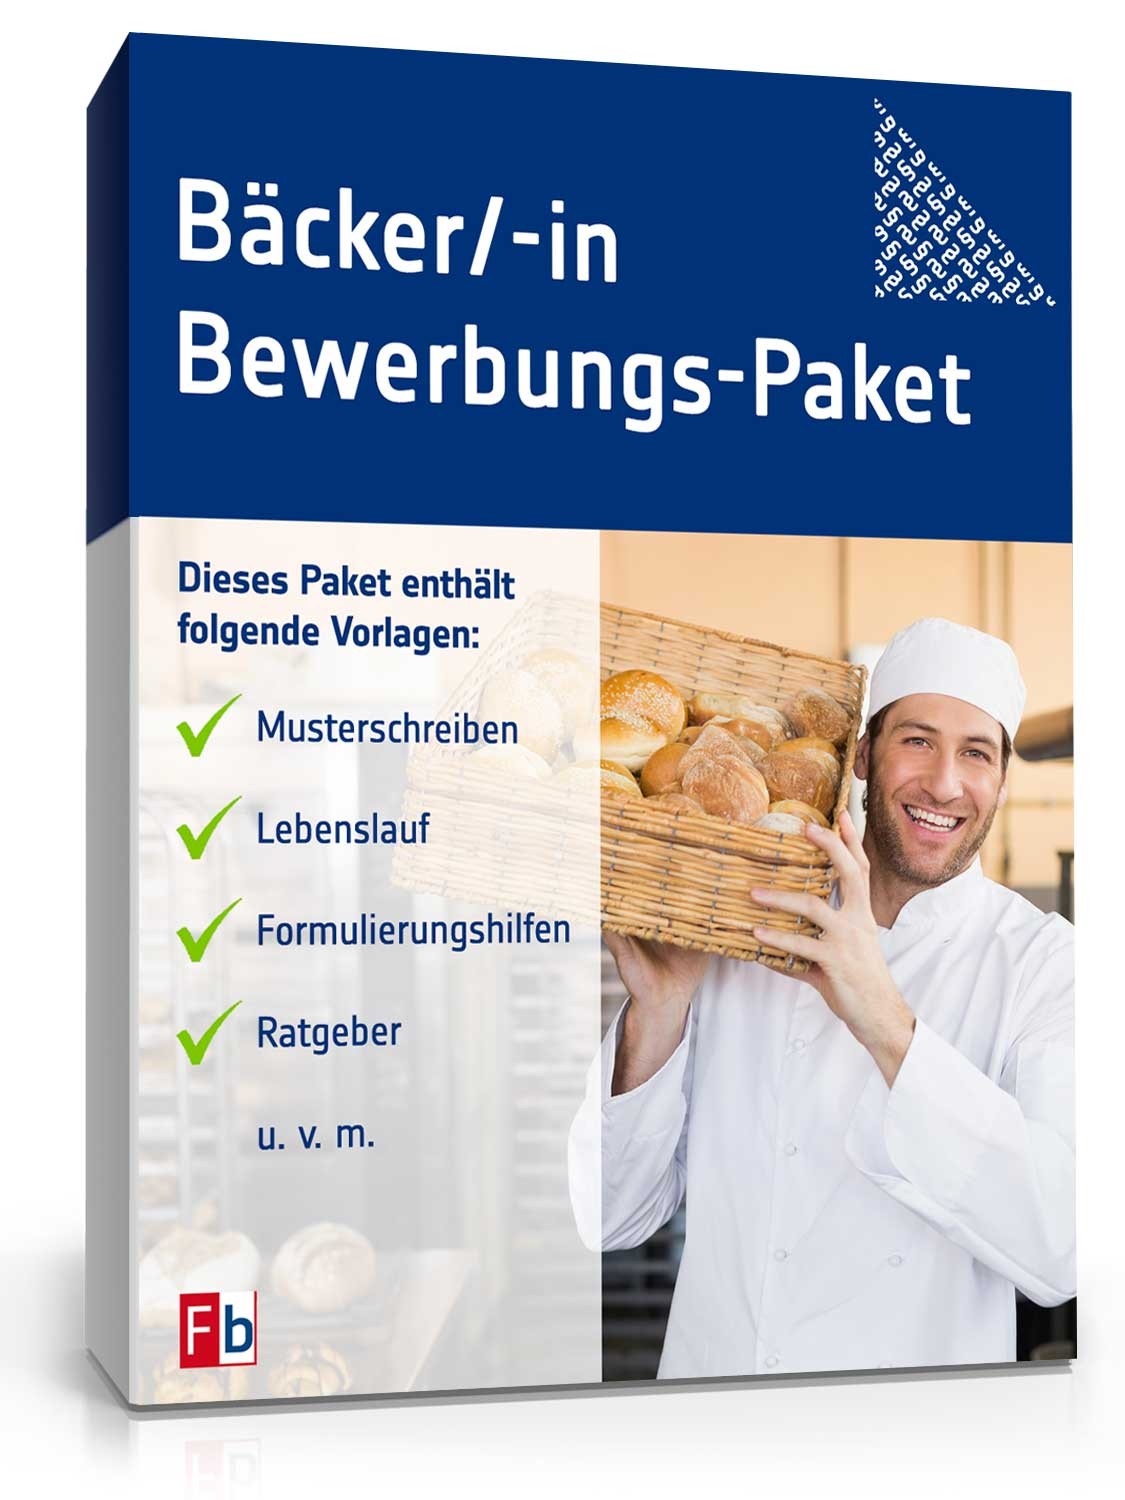 Hauptbild des Produkts: Bäcker Bewerbungs-Paket 